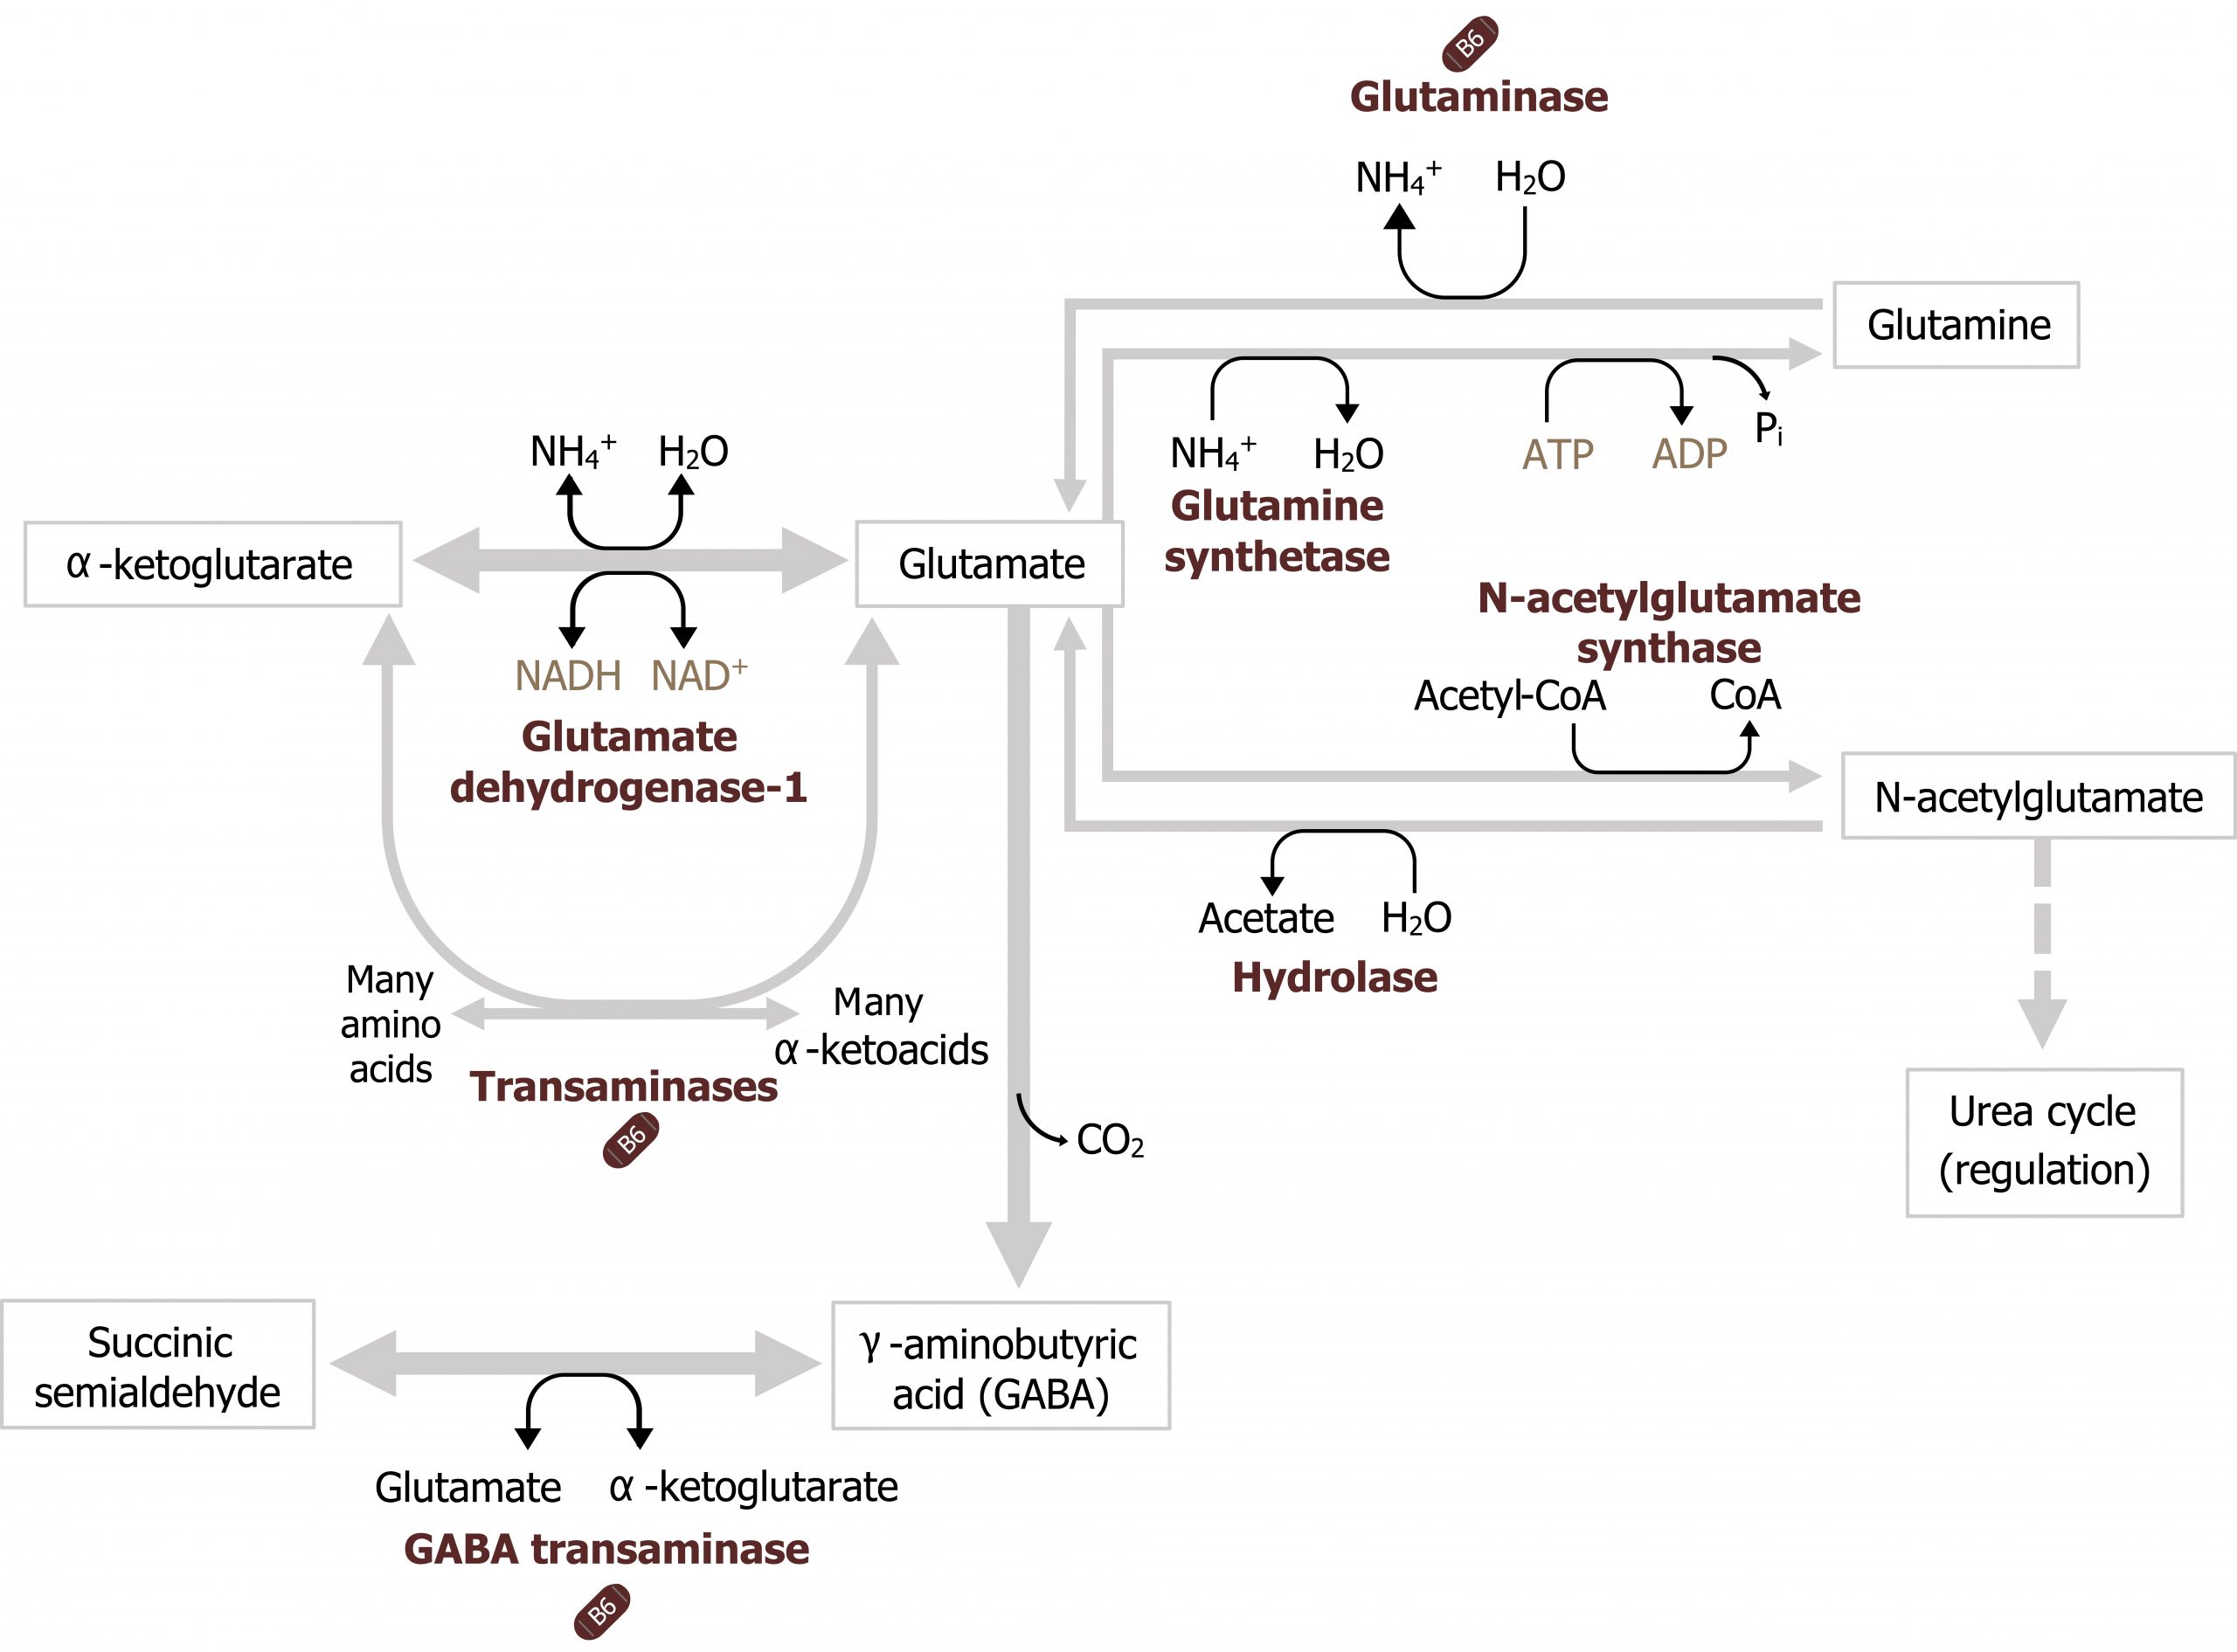 Glutamate forward arrow with enzyme glutamine synthetase to glutamine. Glutamine backwards arrow with enzyme glutaminase to glutamate. Glutamate forward arrow with enzyme N-acetylglutamate synthase to N-acetylglutamate arrow urea cycle (regulation). N-acetylglutamate backwards arrow with enzyme hydrolase to glutamate. Glutamate arrow ℽ-aminobutyric acid (GABA) bidirectional arrow with enzyme GABA transaminase to succinic semialdehyde. Glutamate bidirectional arrow with enzyme glutamate dehydrogenase-1 to α-ketoglutarate. Glutamate and many α-ketoacids second bidirectional arrow with enzyme transaminases to α-ketoglutarate and many amino acids.